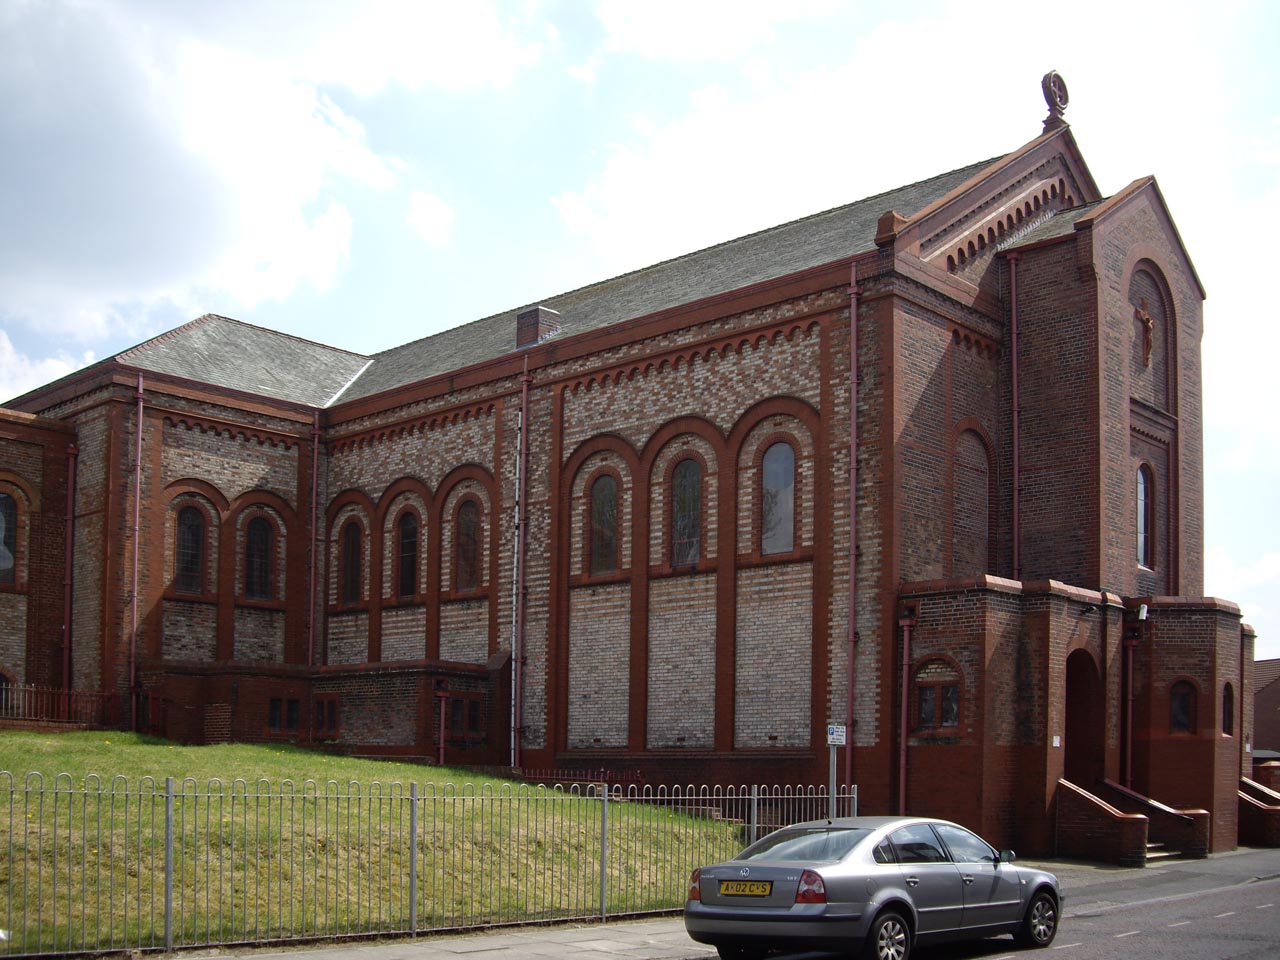 The Roman Catholic Church of St Joseph, Heywood